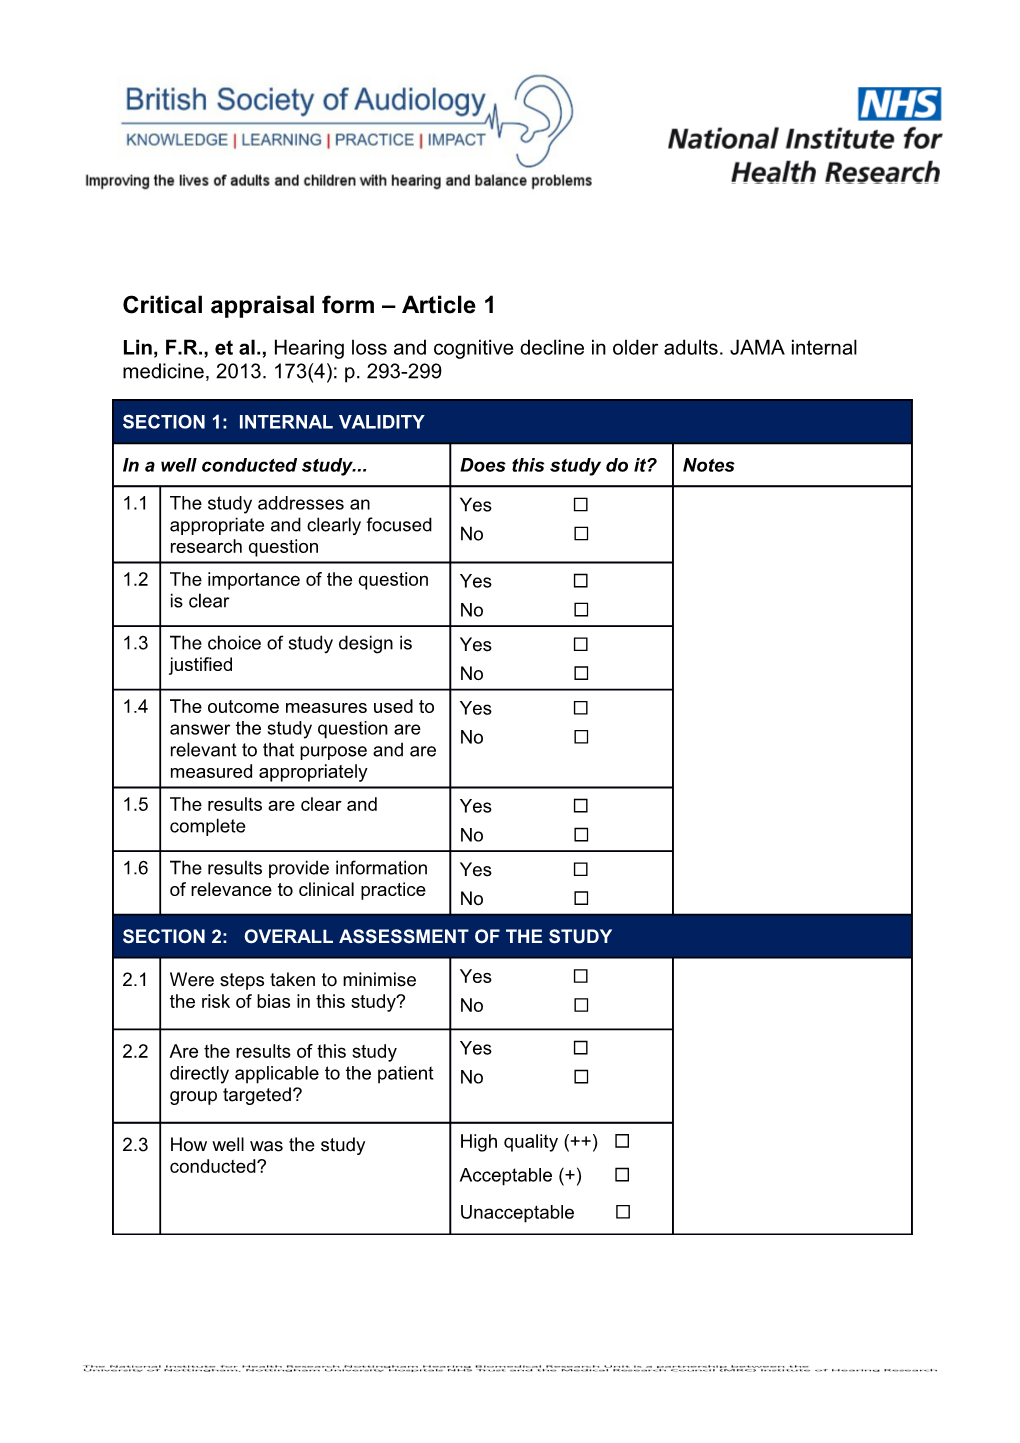 Critical Appraisal Form Article 1